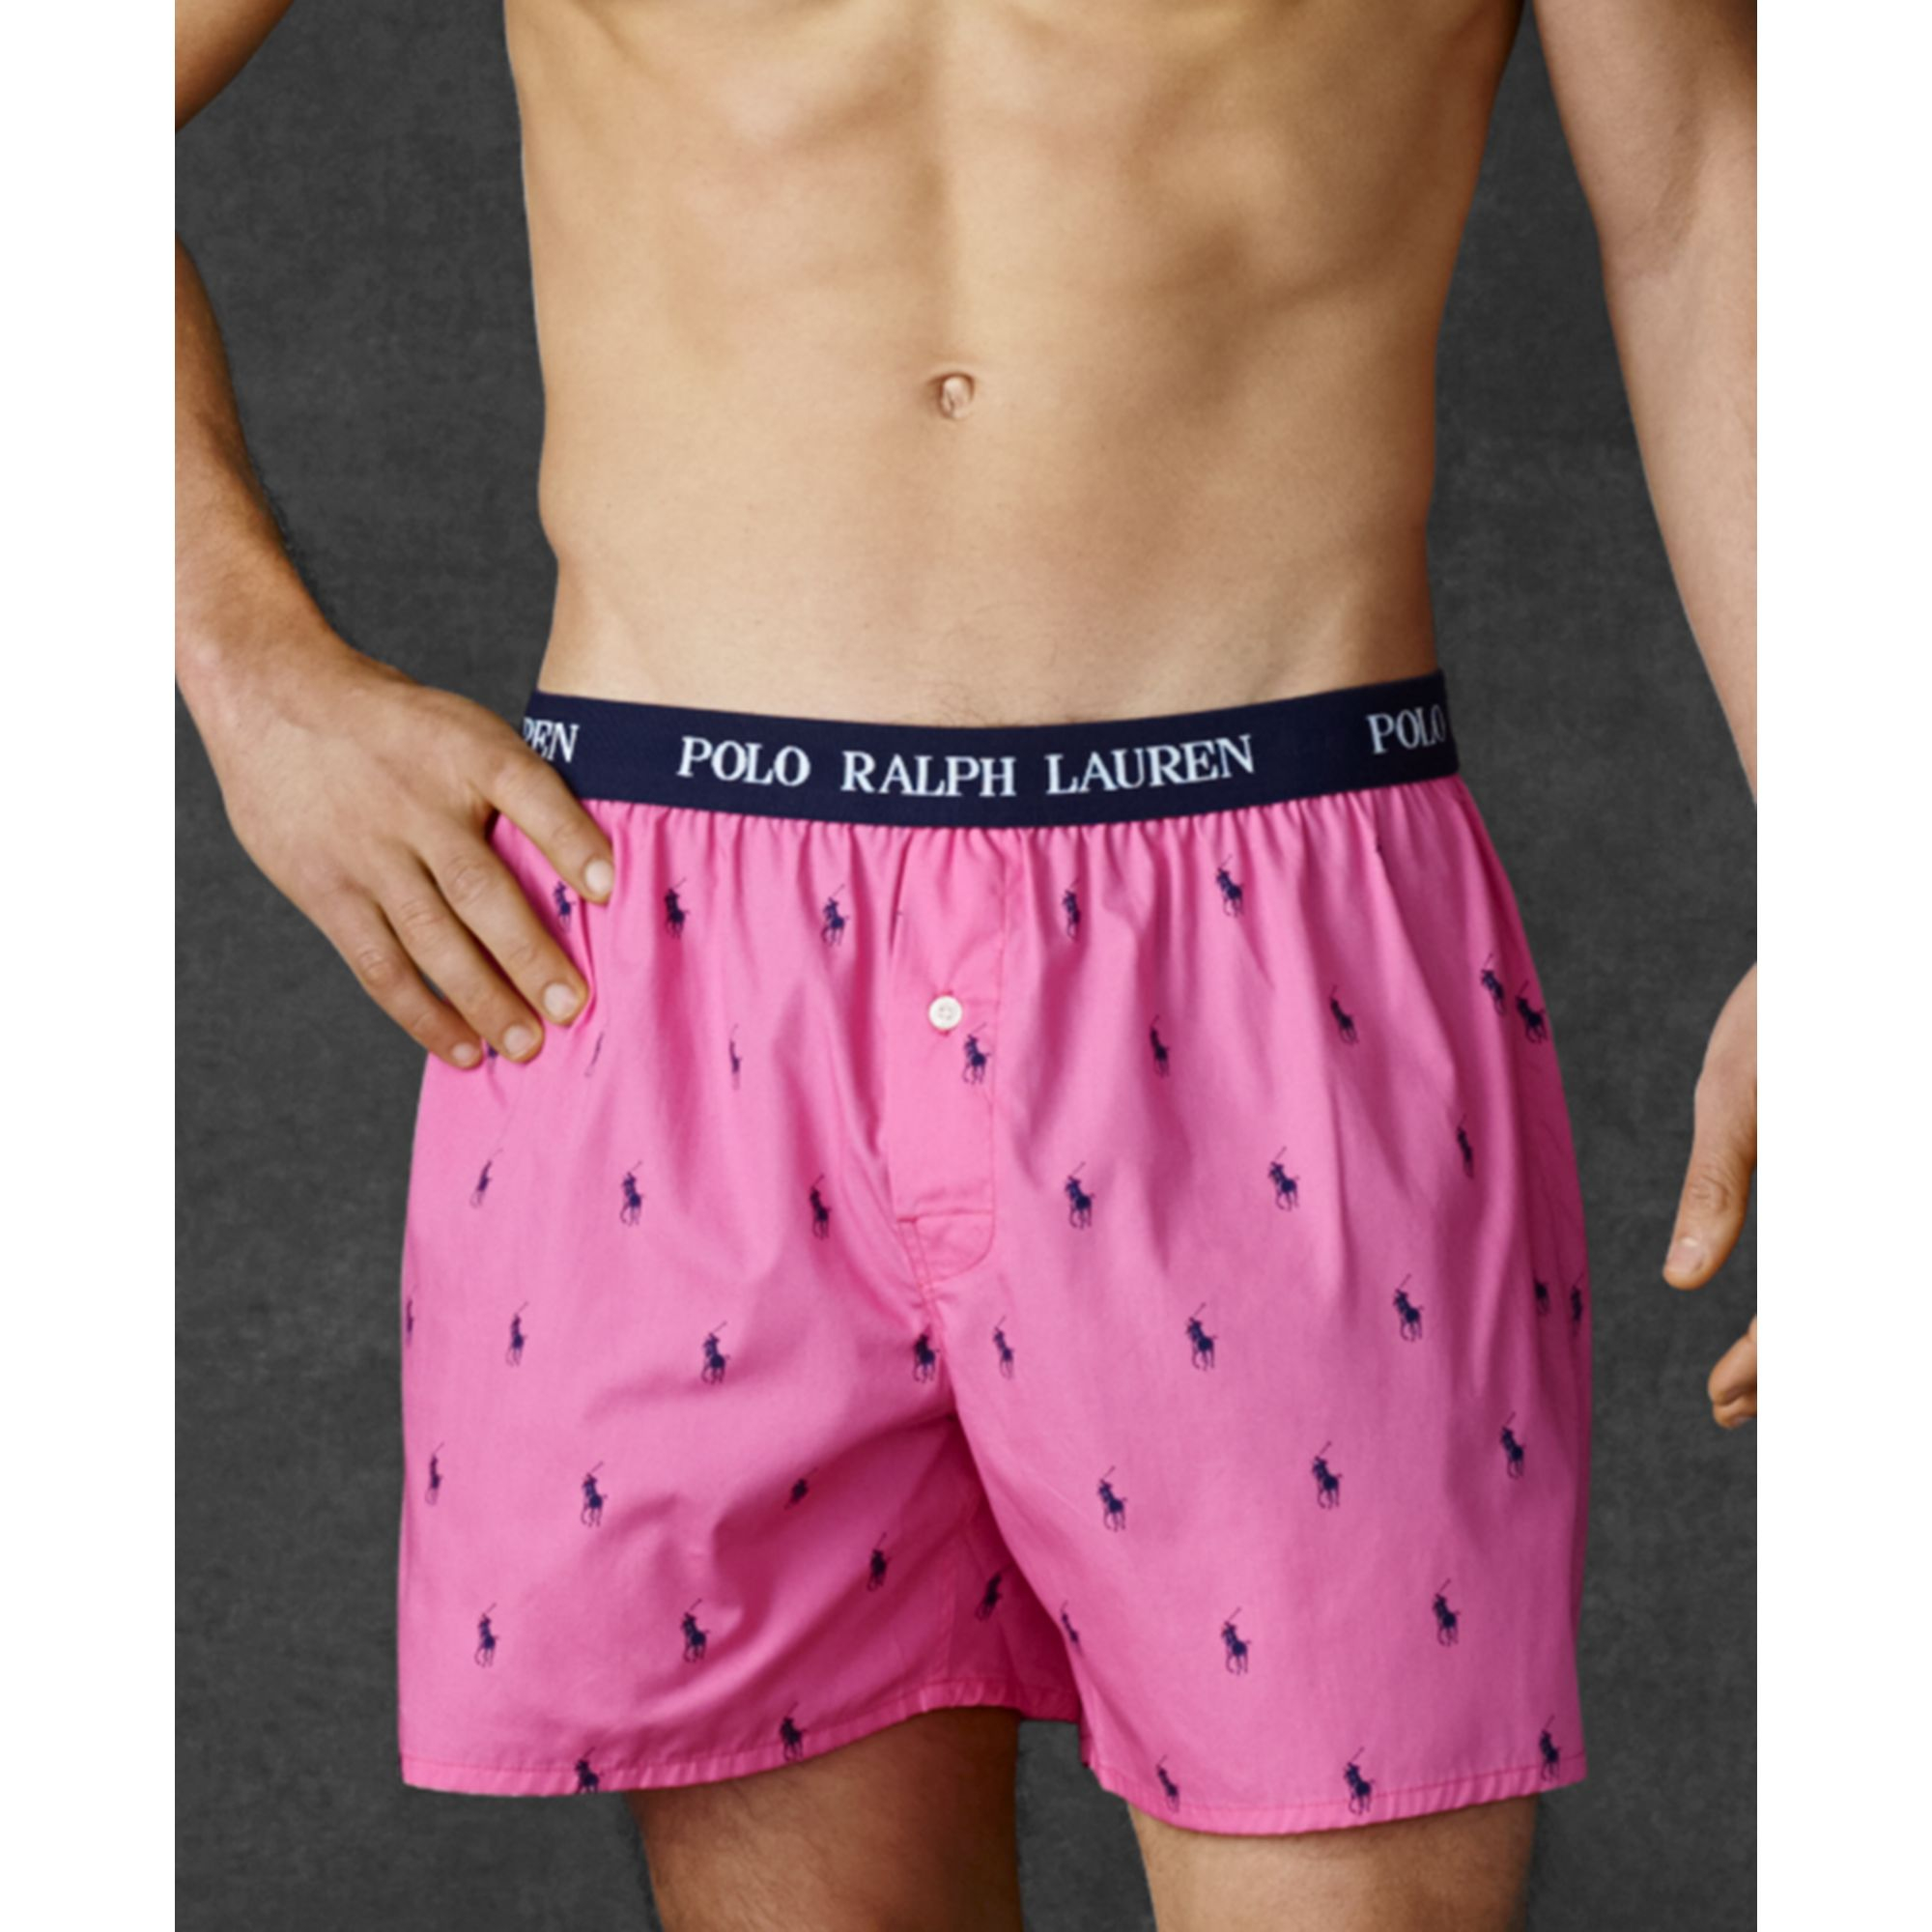 Polo Ralph Lauren Men's Underwear Cheapest Store, Save 53% | jlcatj.gob.mx